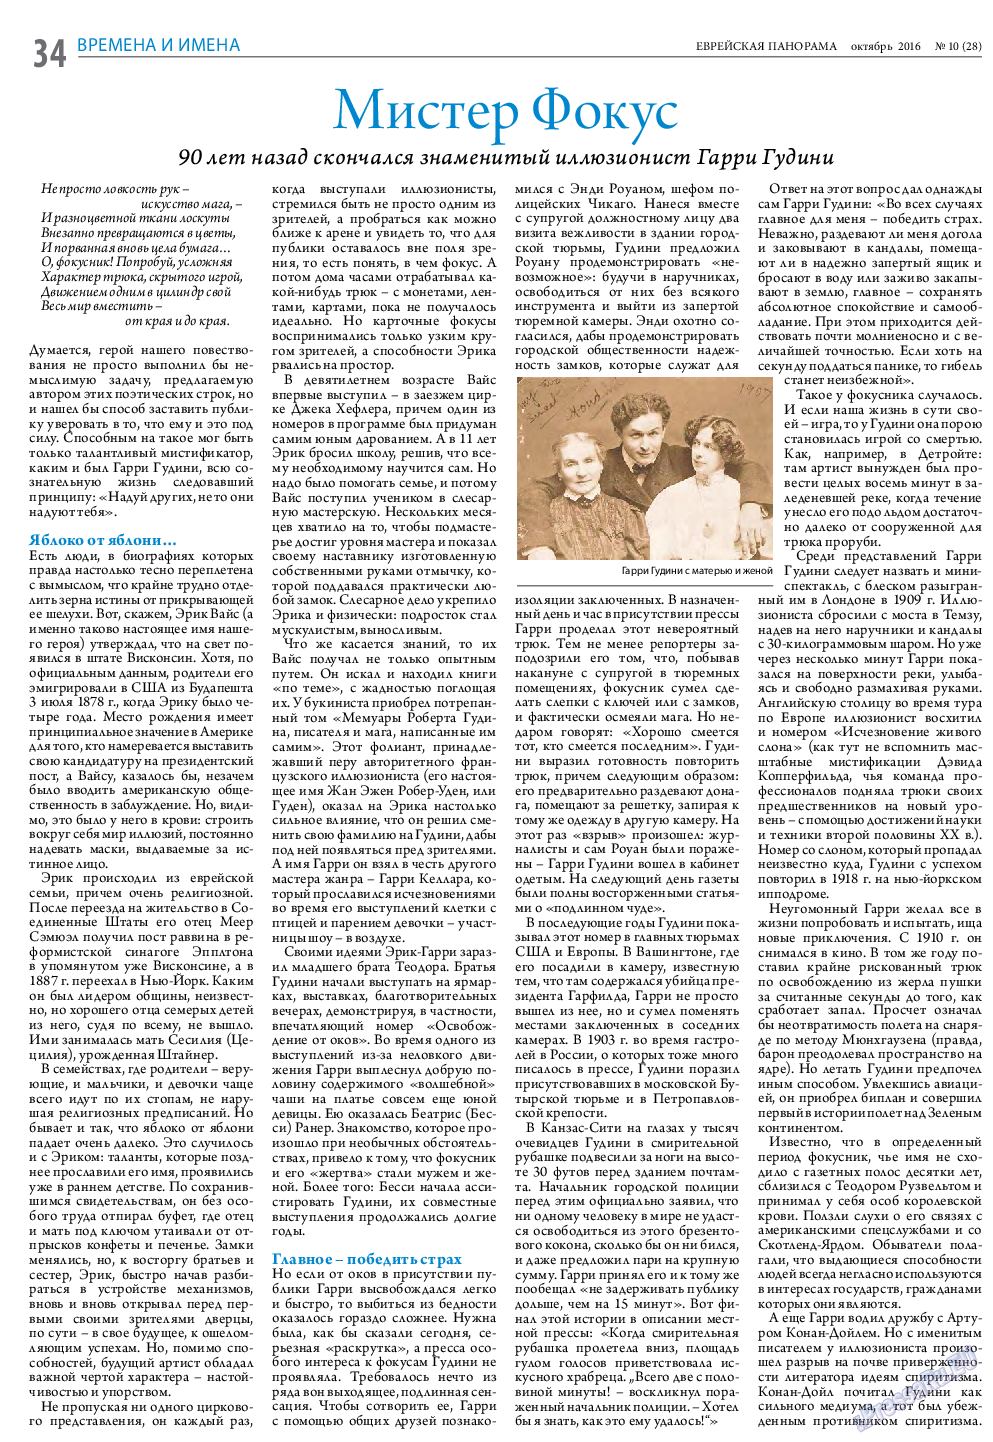 Еврейская панорама, газета. 2016 №10 стр.34